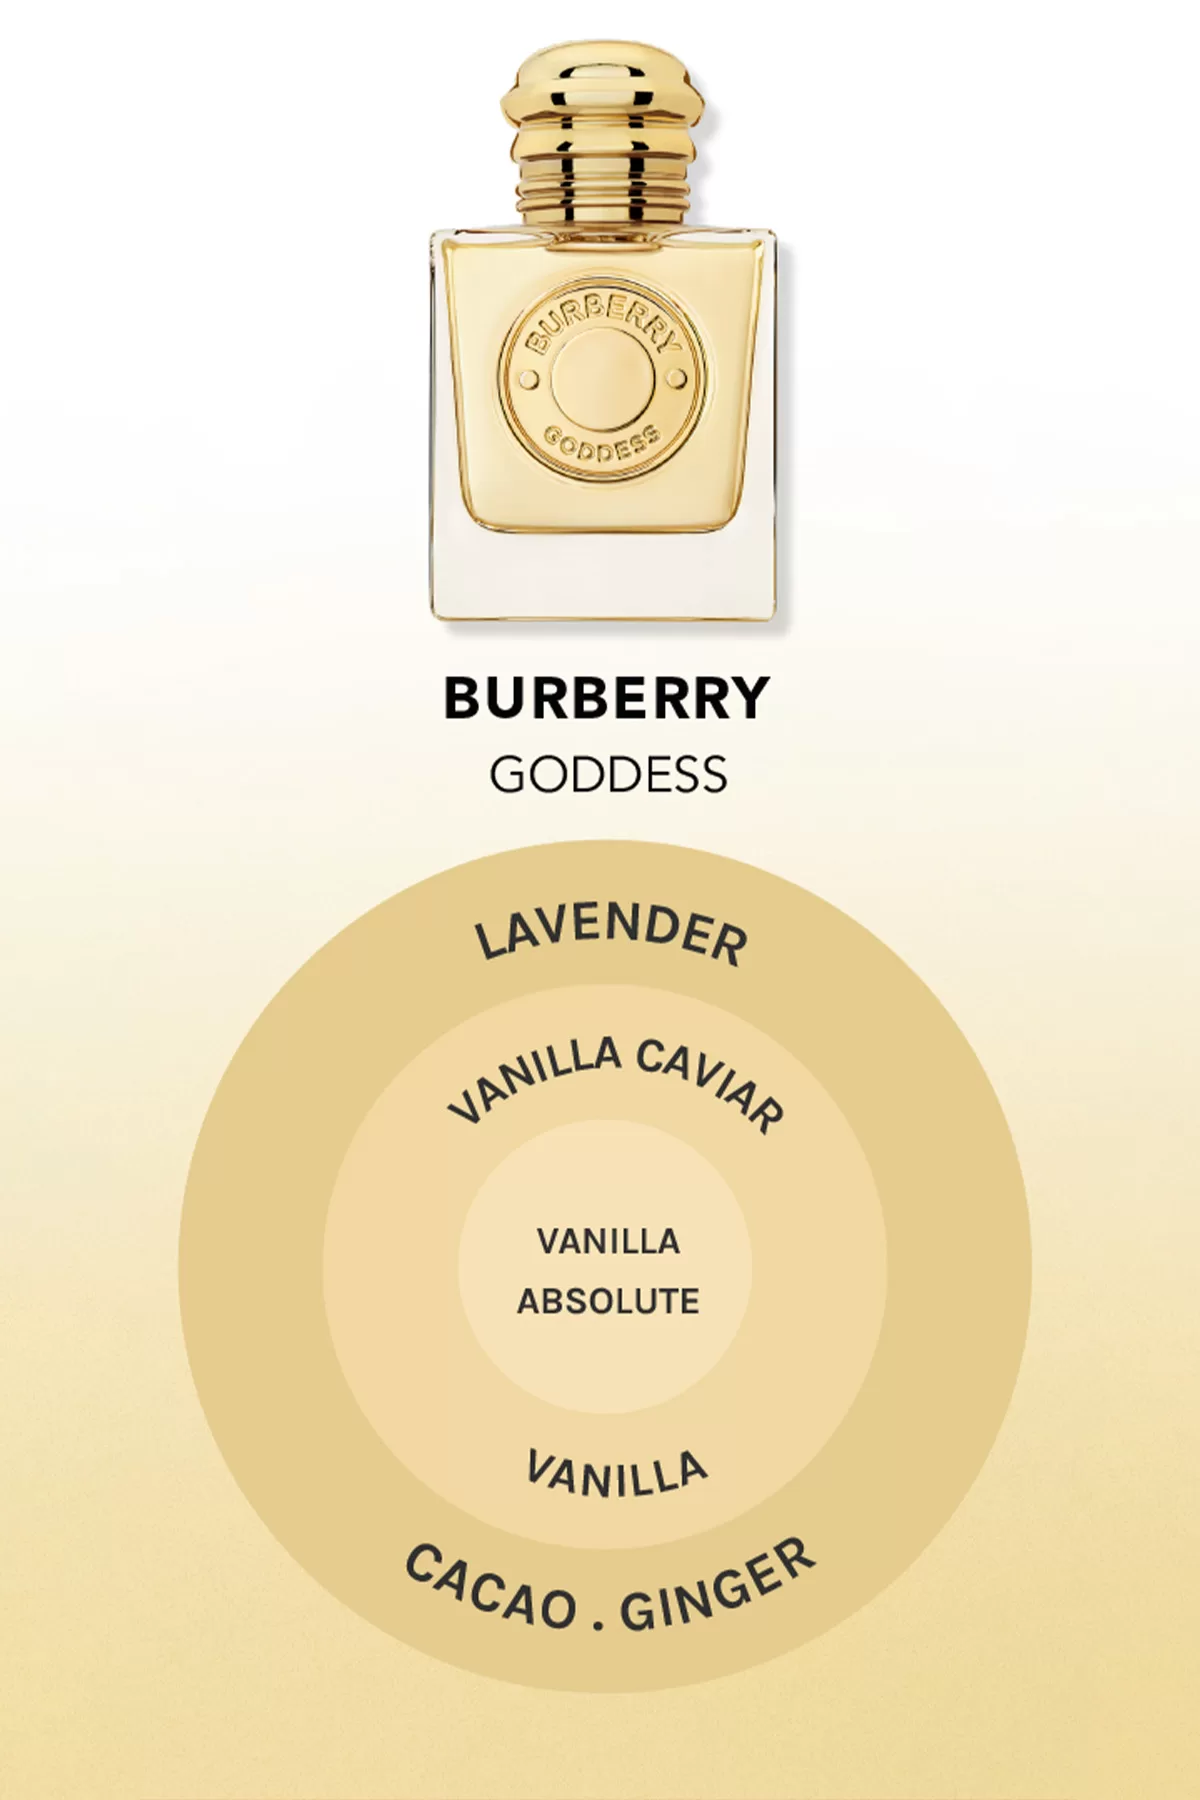 Hvordan lugter den nye Burberry Goddess?